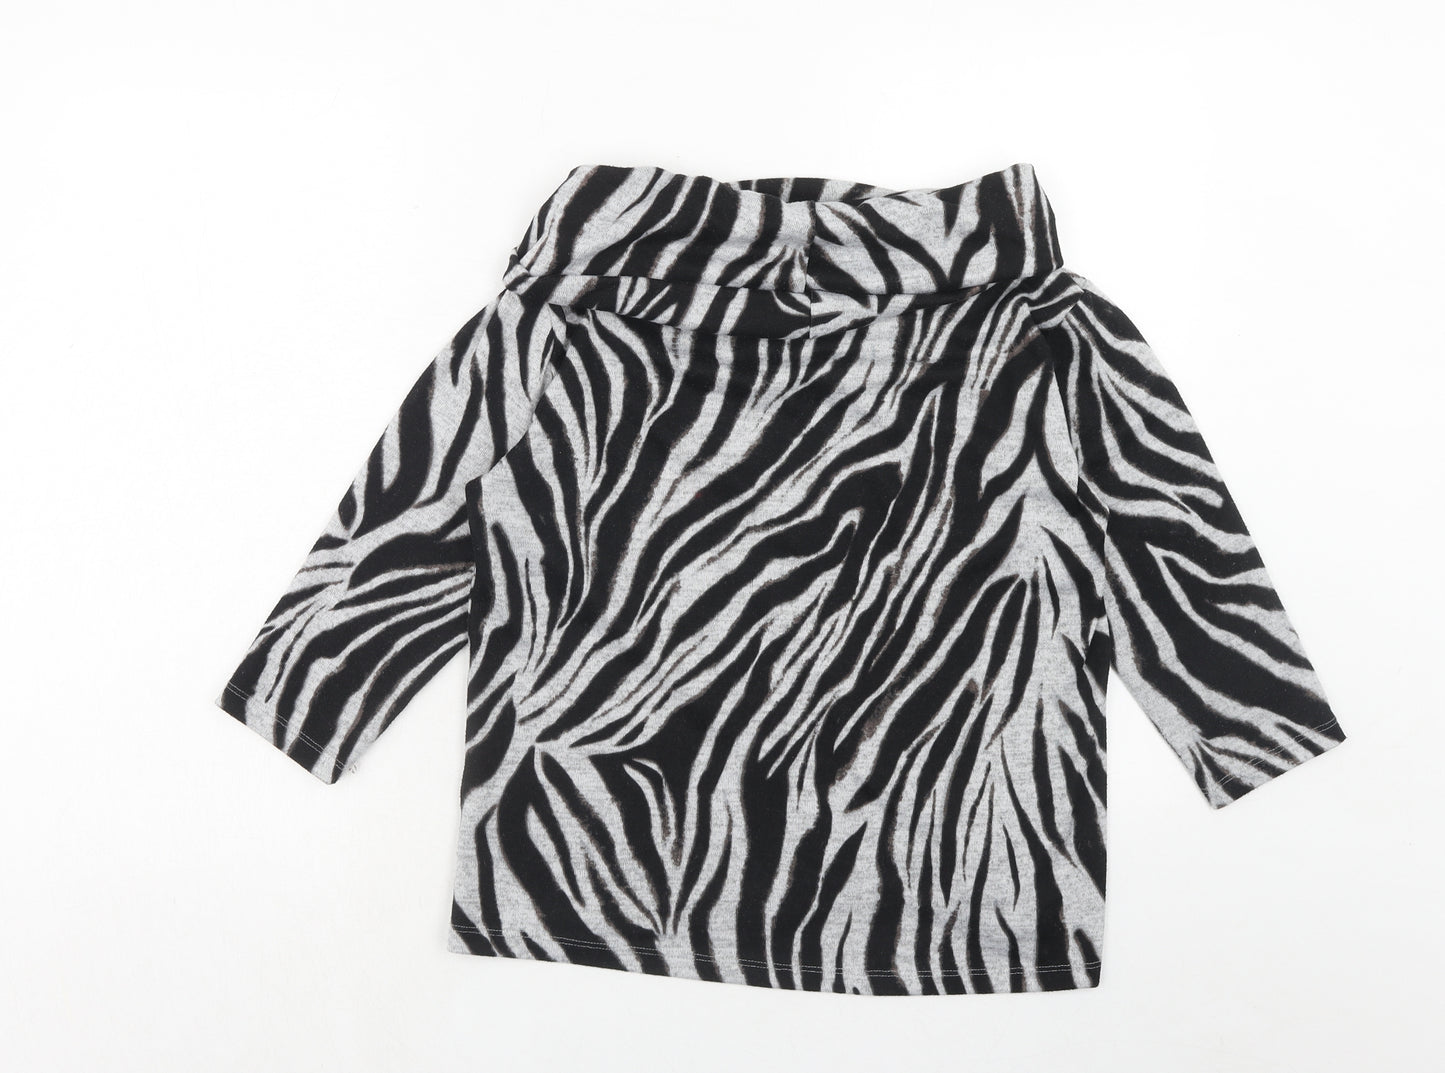 Marks and Spencer Womens Grey Animal Print Polyester Basic Blouse Size 18 Roll Neck - Zebra Print